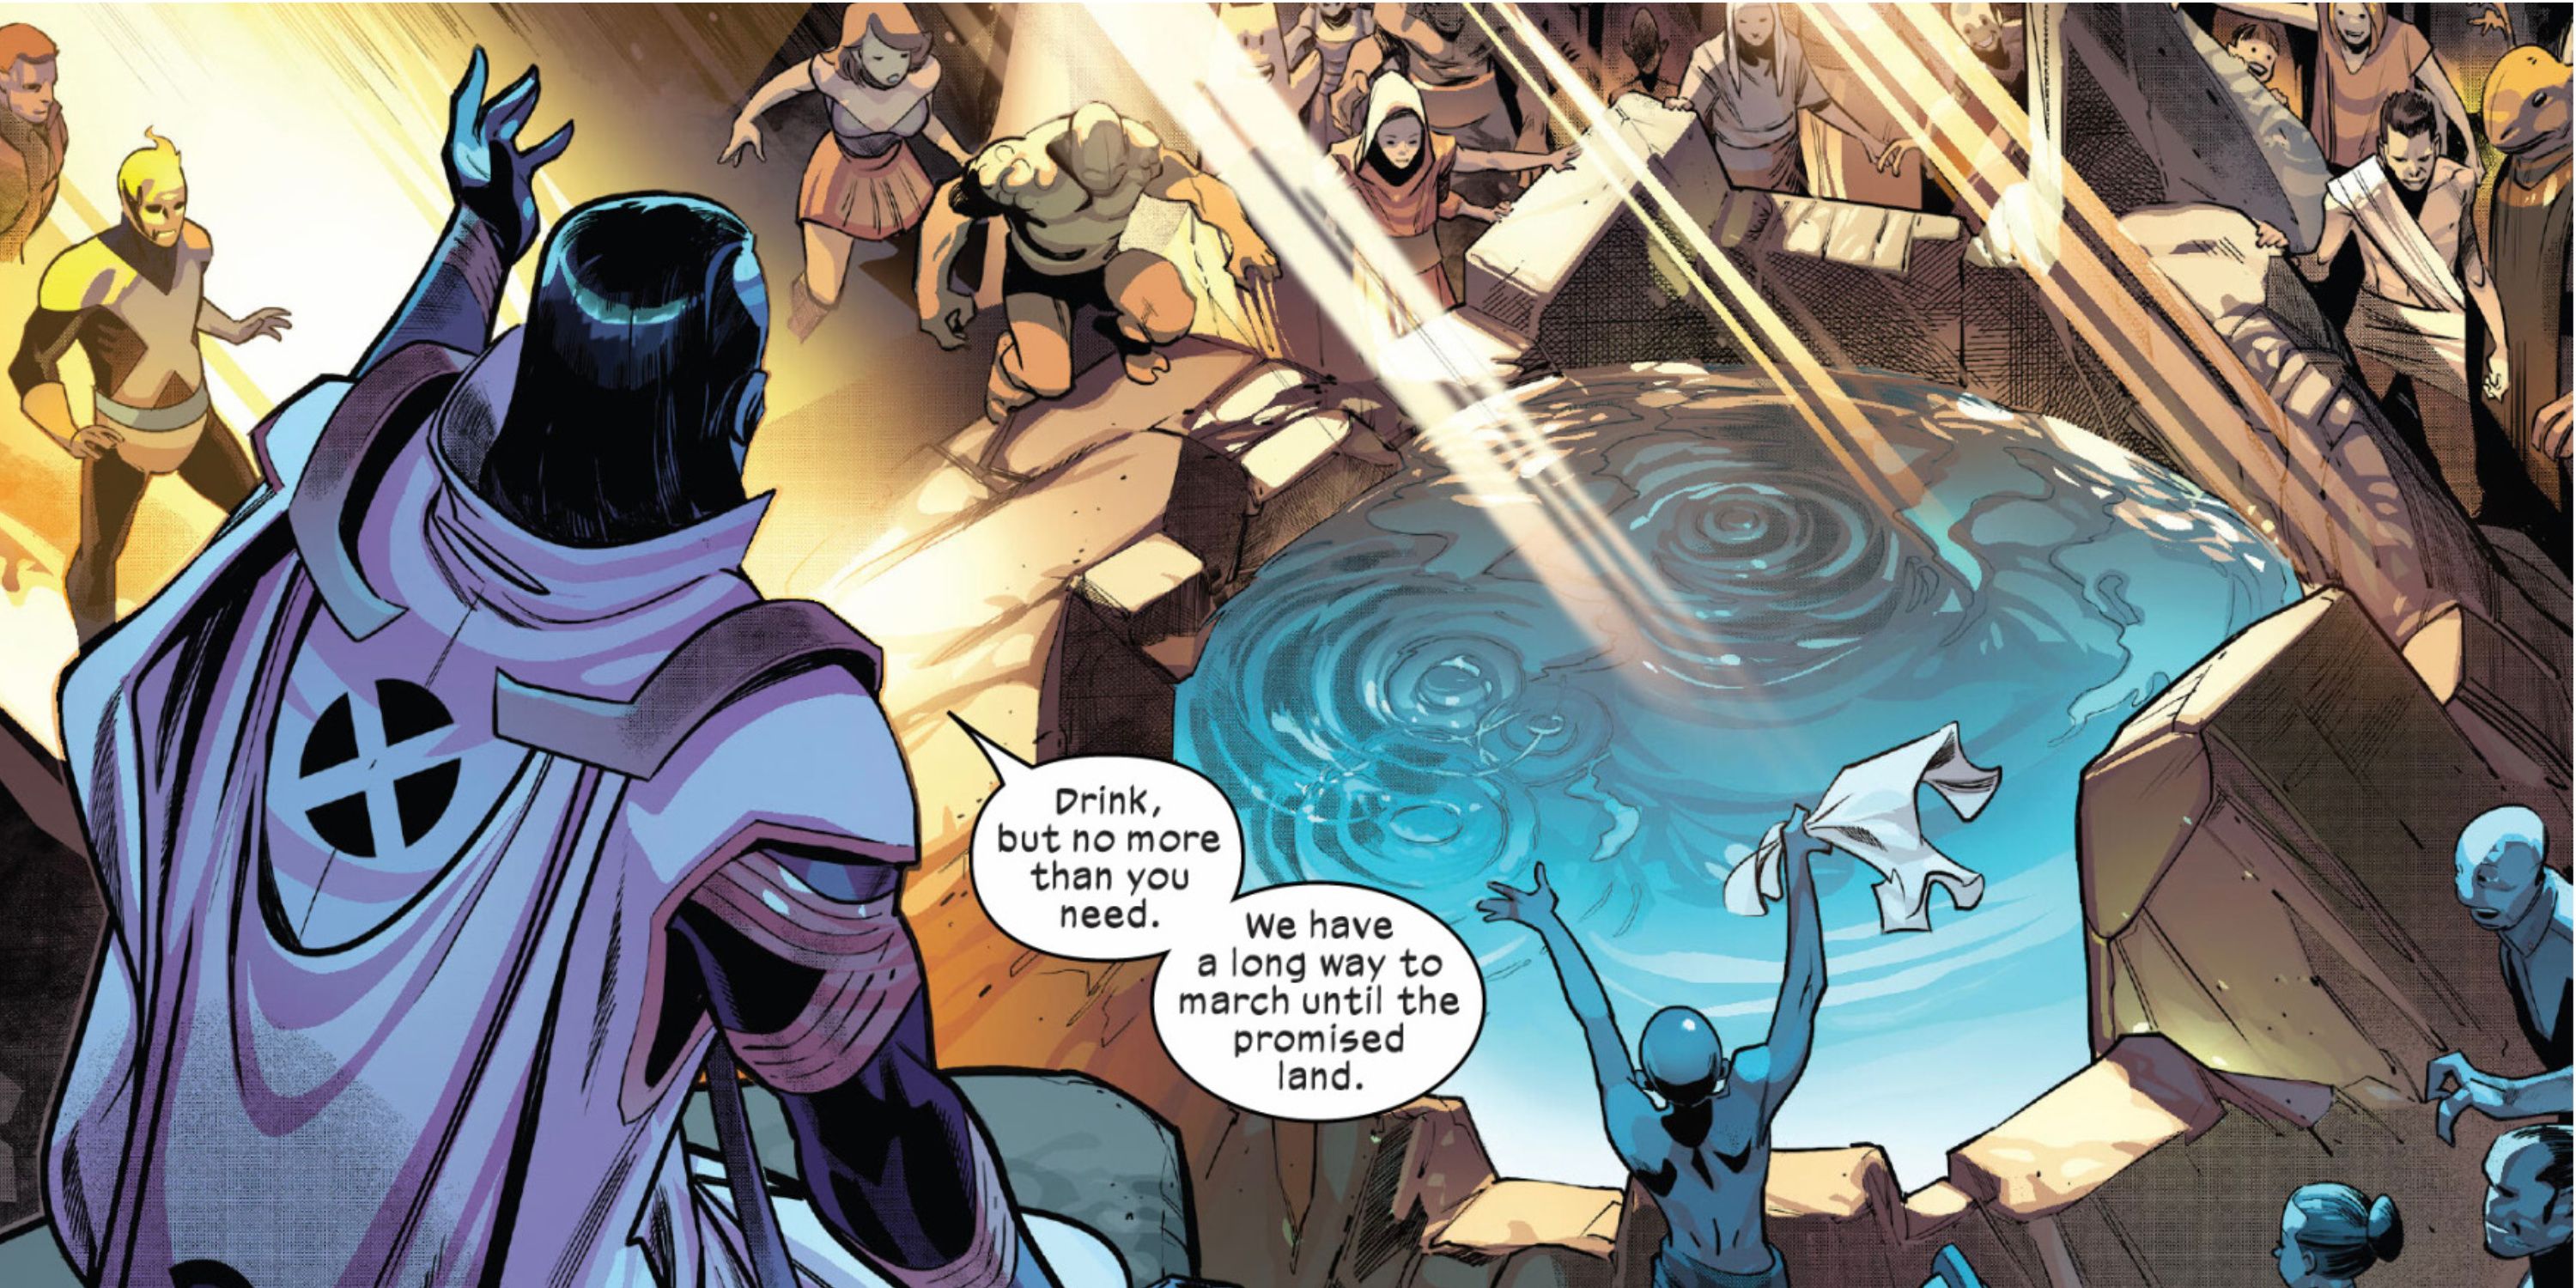 Exodus usando seus poderes para conseguir água para os mutantes de Krakoa